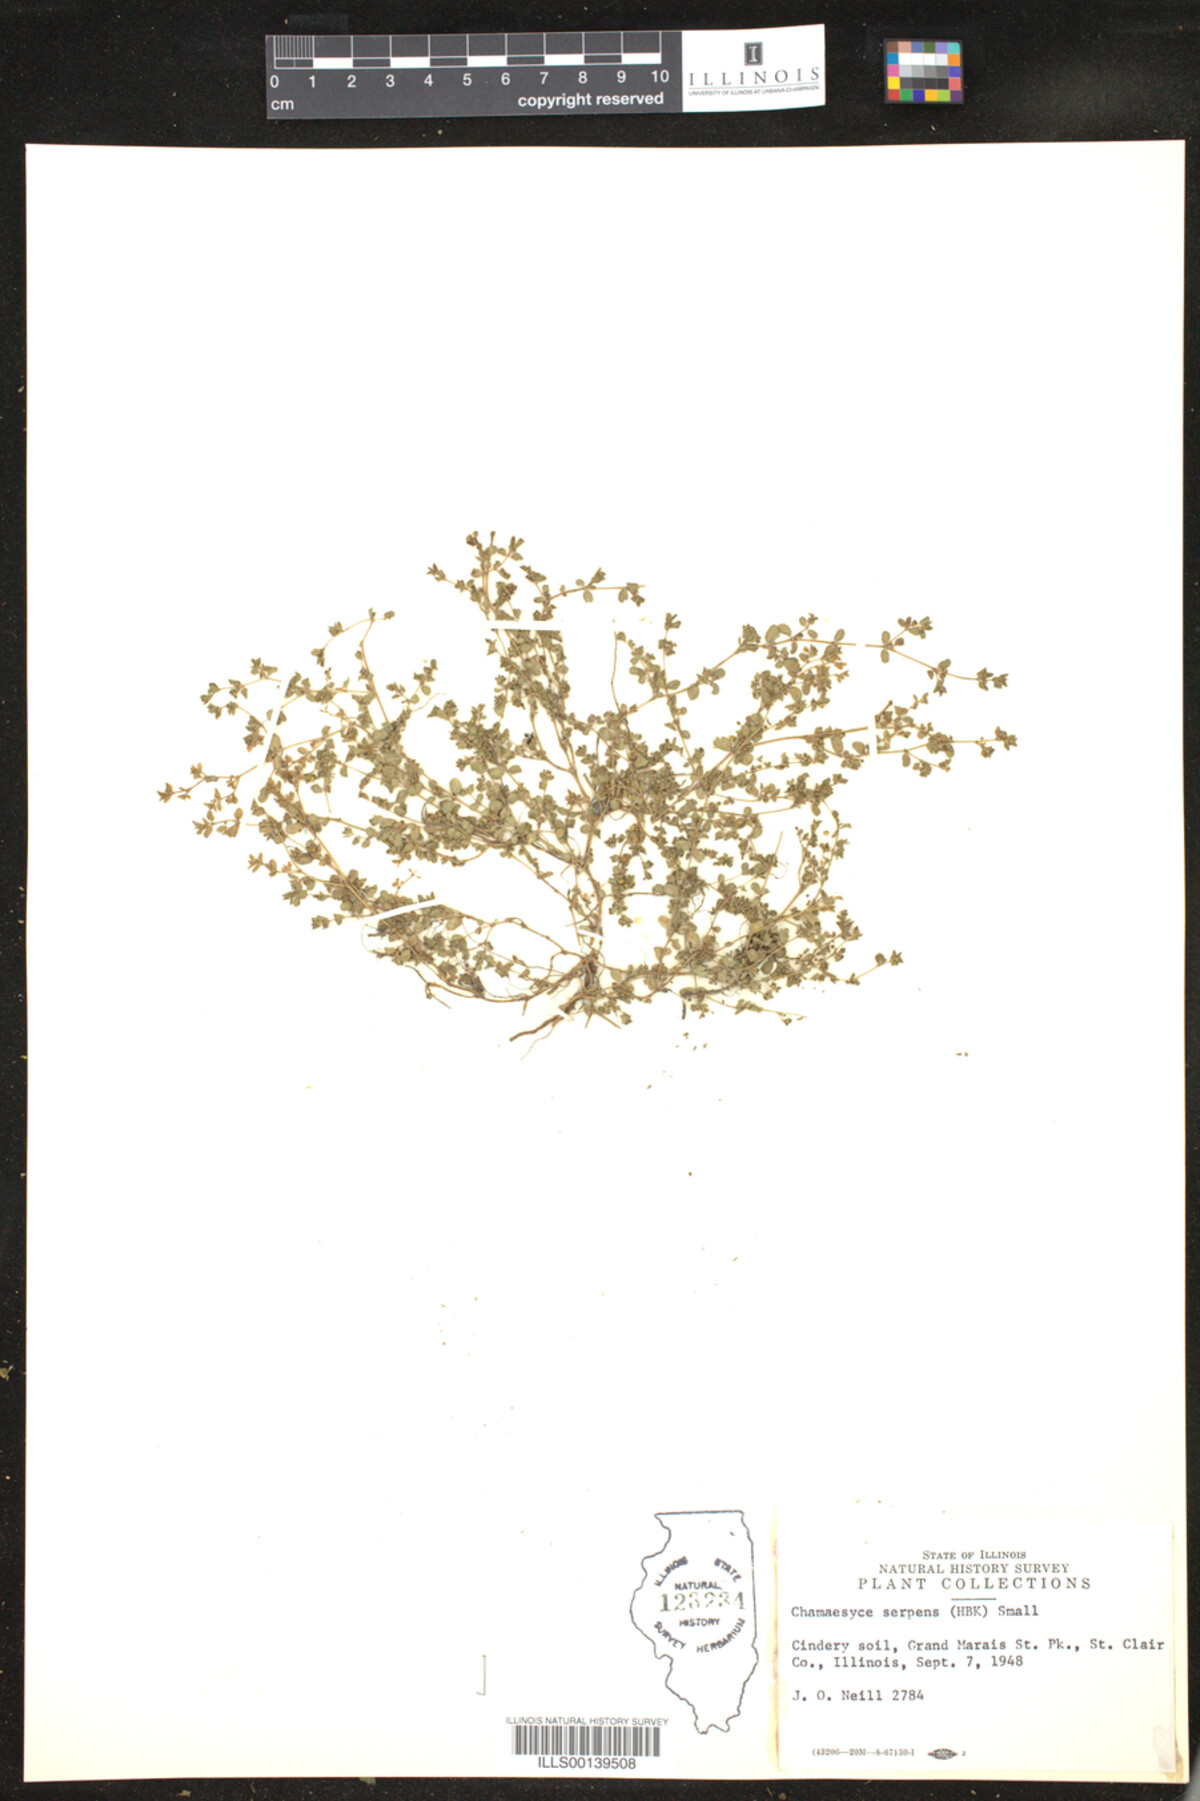 Euphorbia serpens image